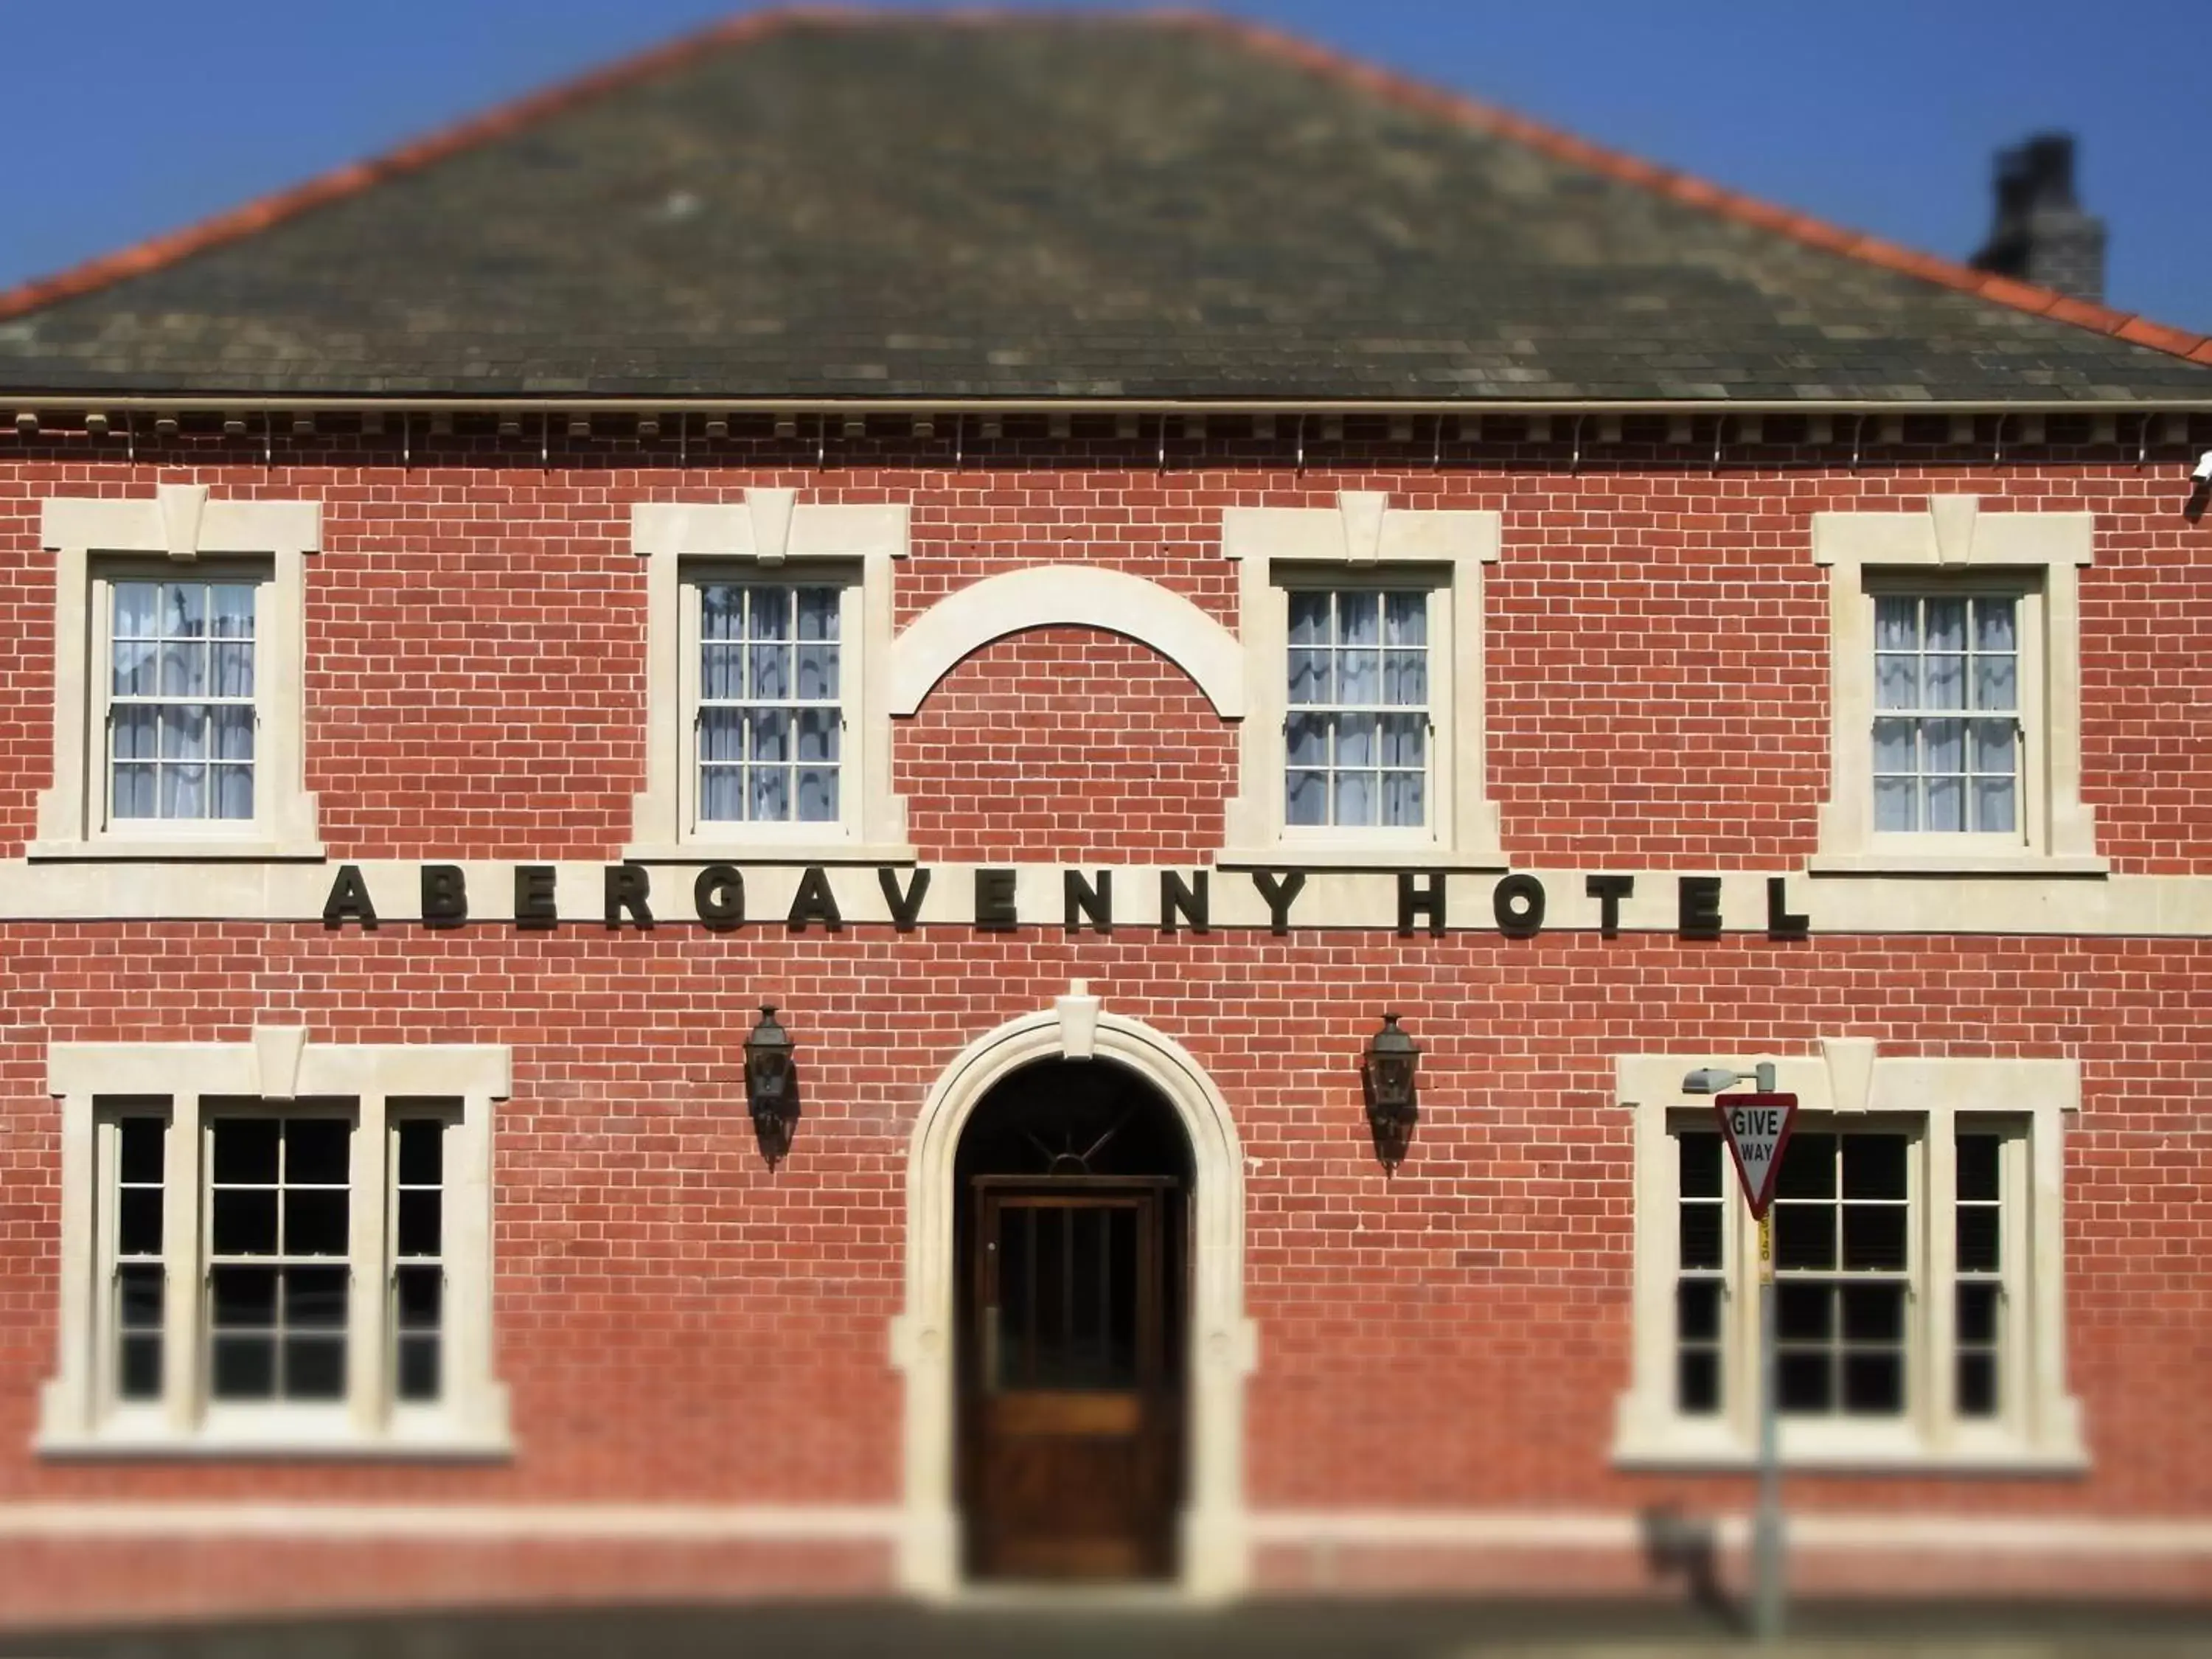 Facade/entrance, Property Building in Abergavenny Hotel